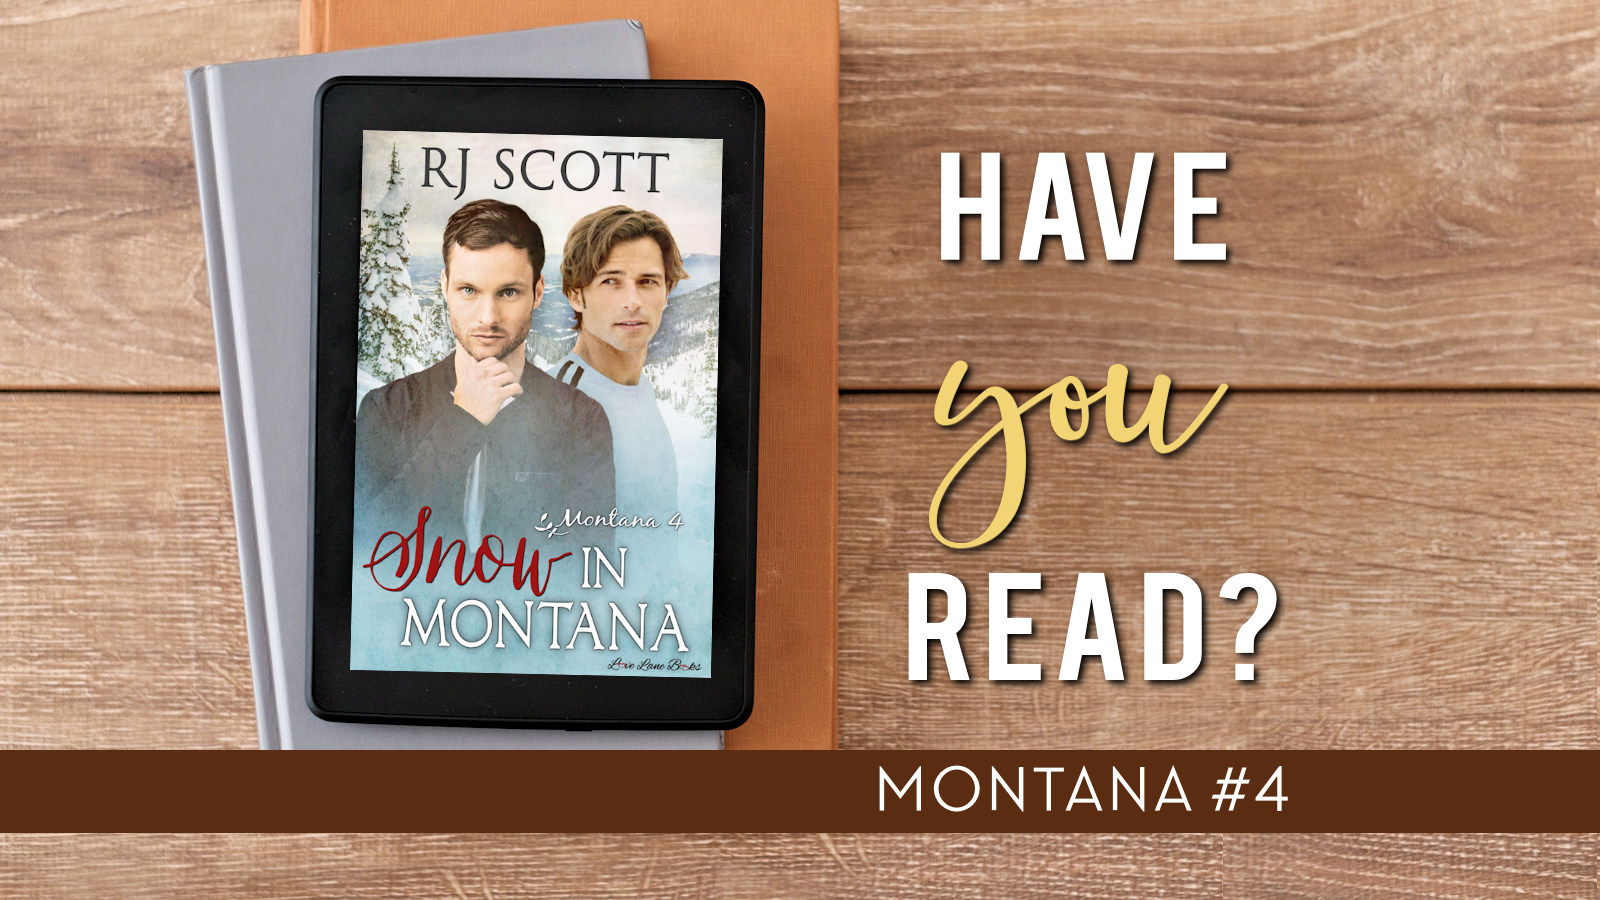 Have you read Snow in Montana MMRomance RJ Scott